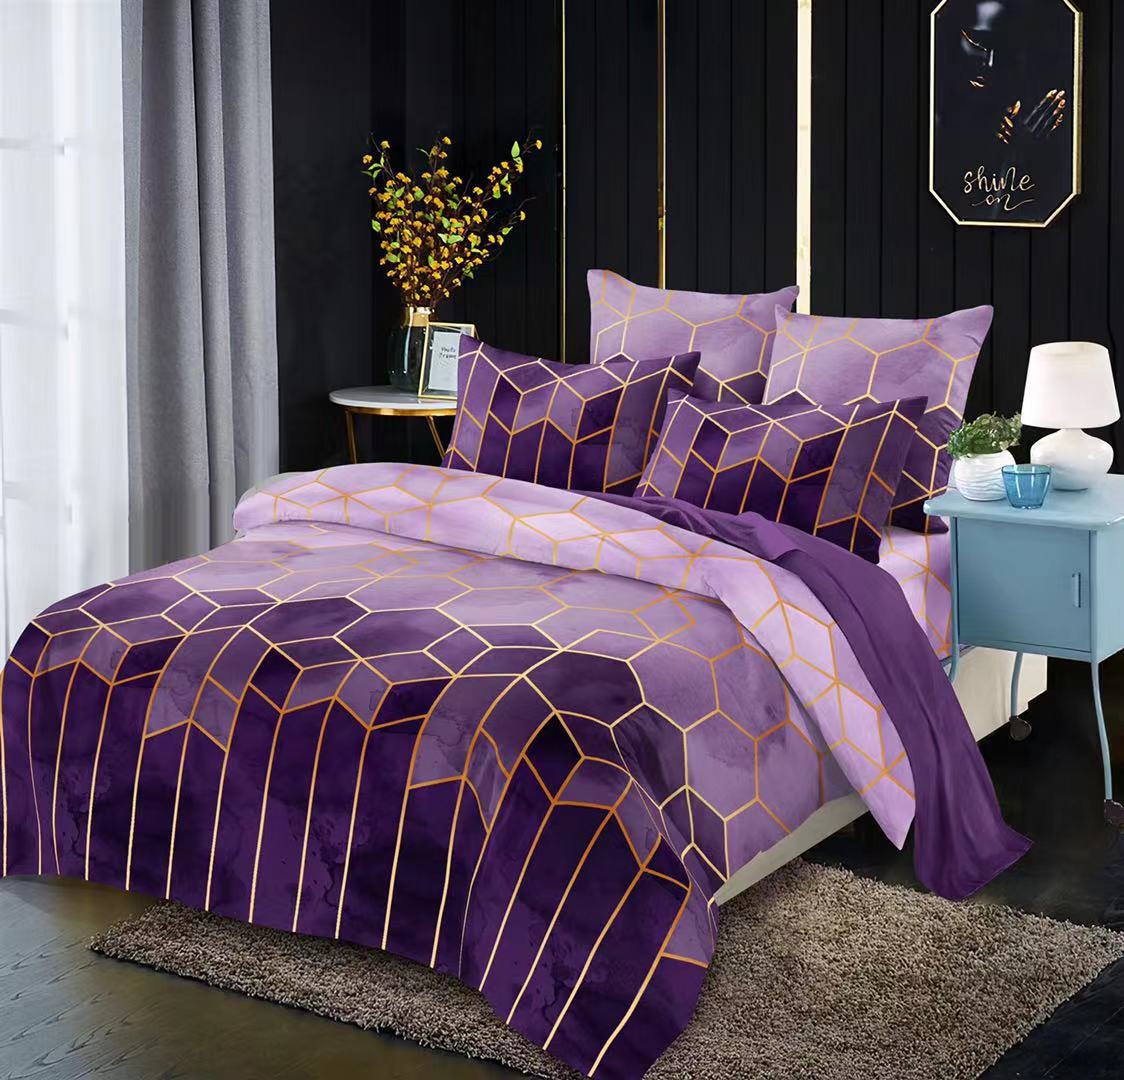 Microfiber Bedding Duvet Cover Sets Modern Printed Pattern Soft Zipper Closure Corner Ties Purple